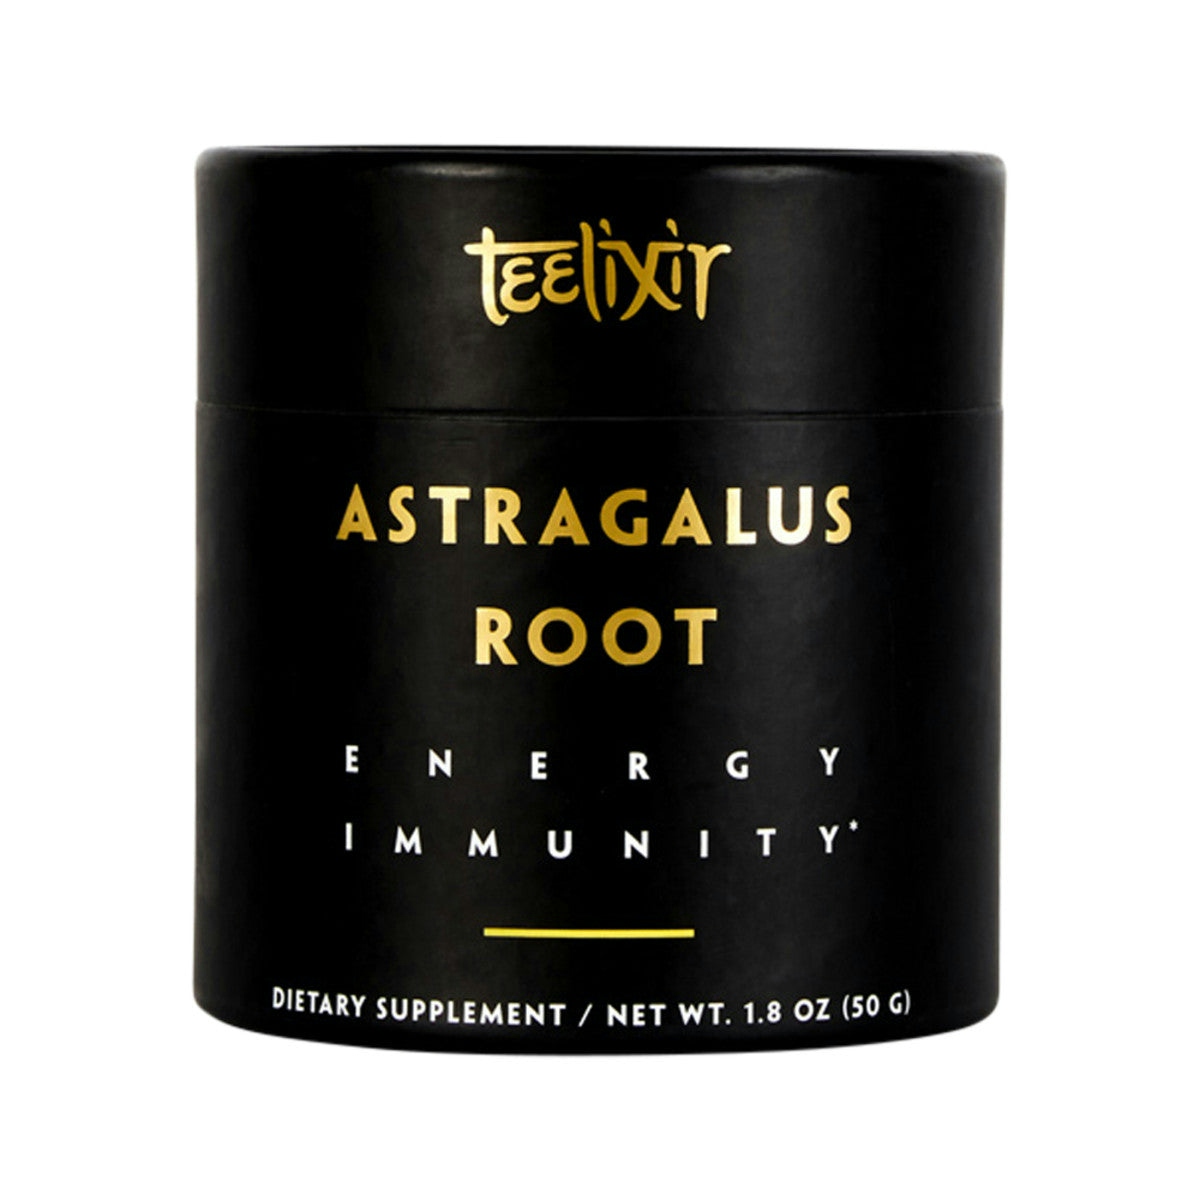 image of Teelixir Astragalus Root (Energy Immunity) 50g with white background